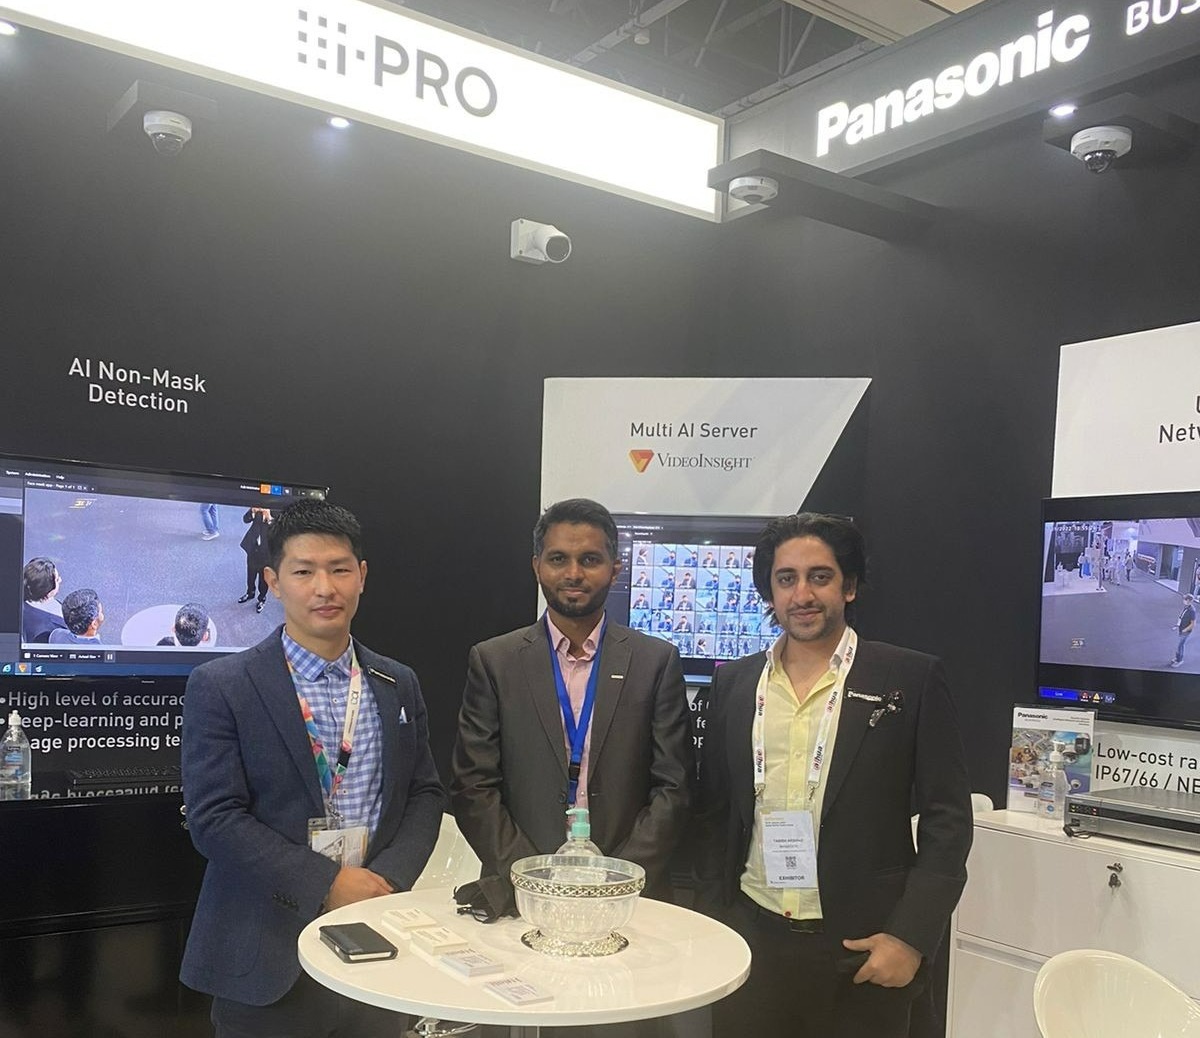 Panasonic launches i-PRO brand in the region